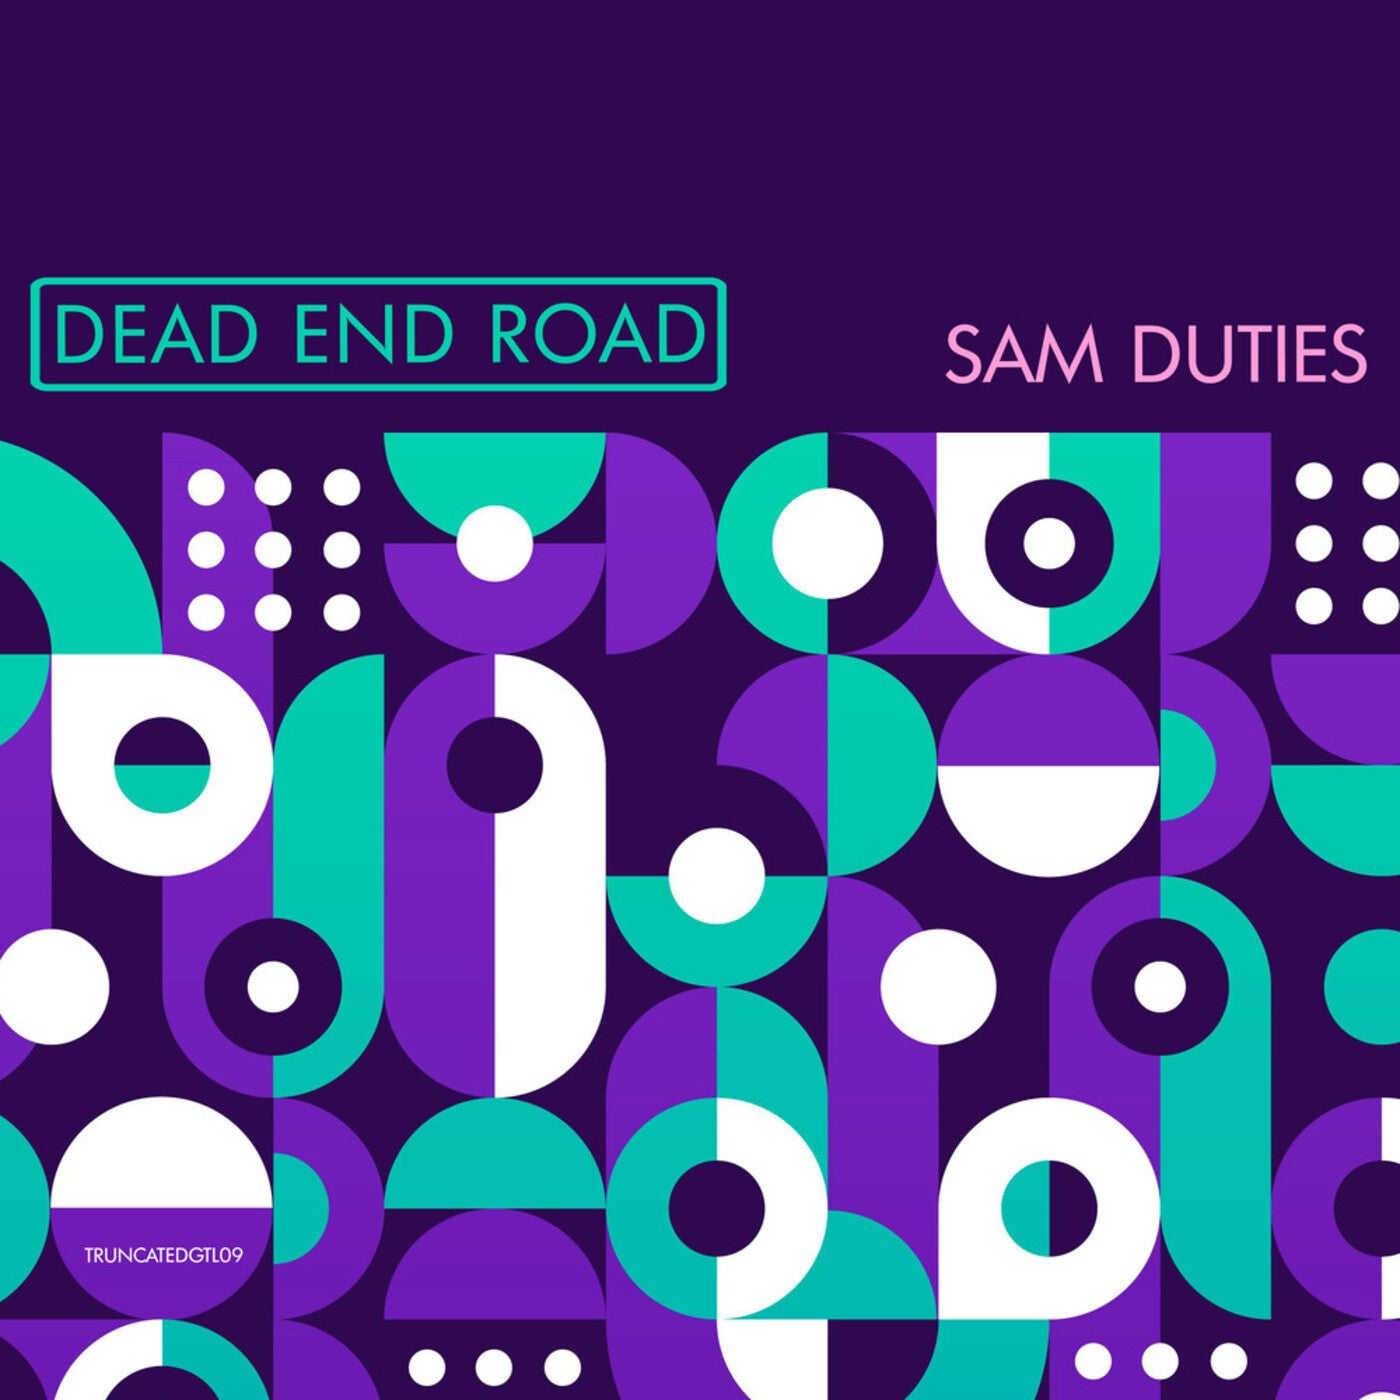 image cover: Sam Duties - Dead End Road / TRUNCATEDGTL09